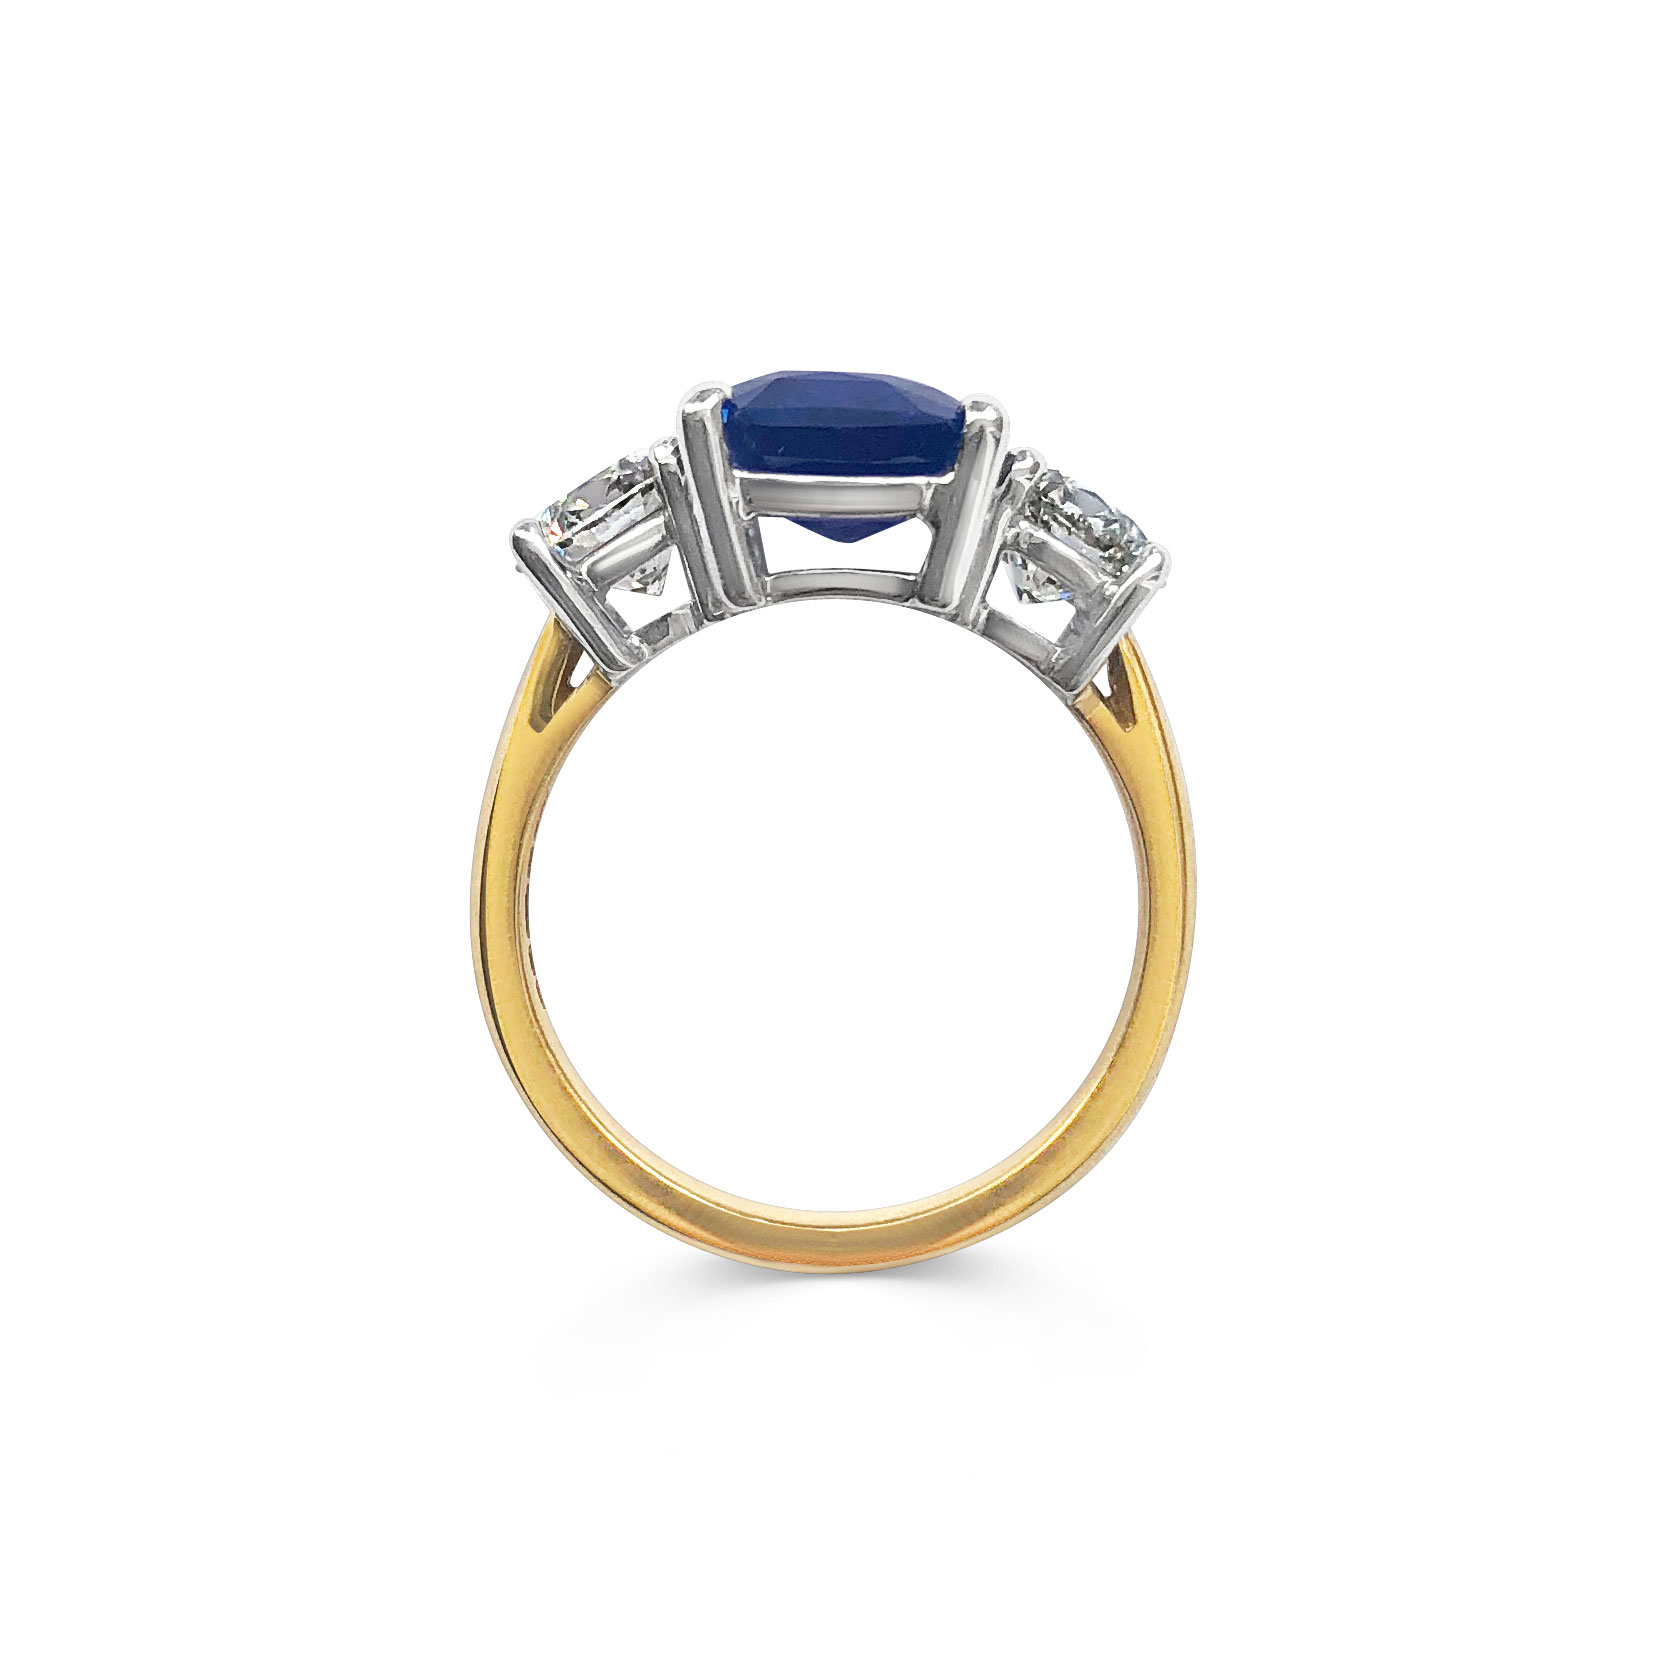 Emerald-cut Sapphire and diamond three stone ring set in 18ct yellow gold.